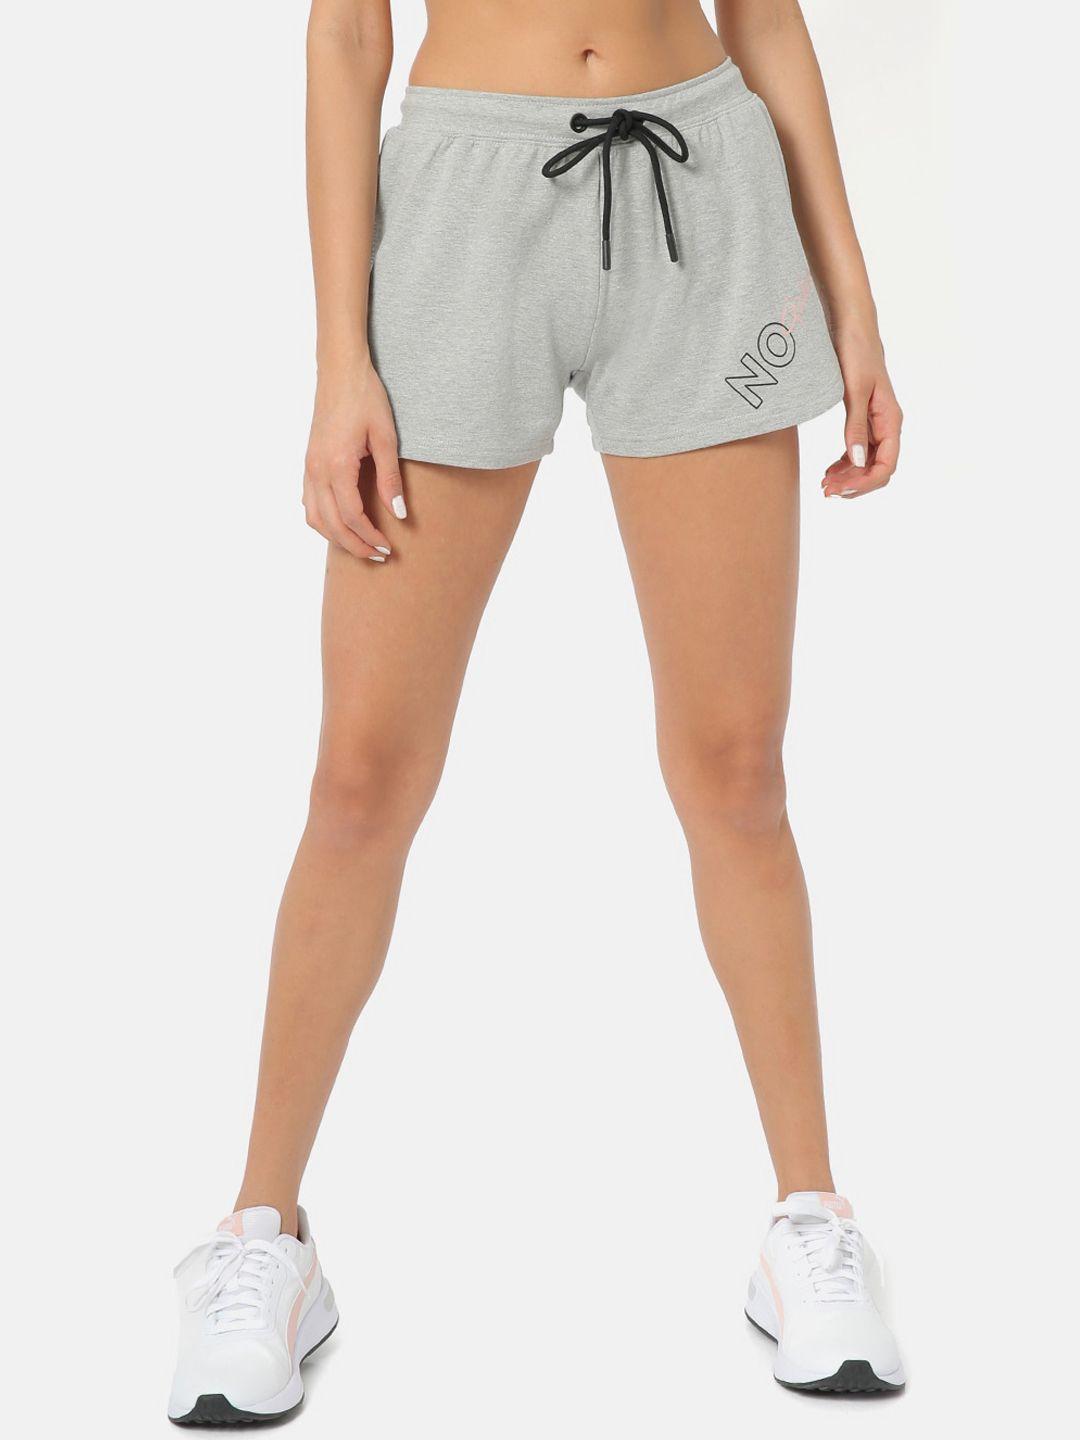 cultsport women grey printed regular fit sports shorts